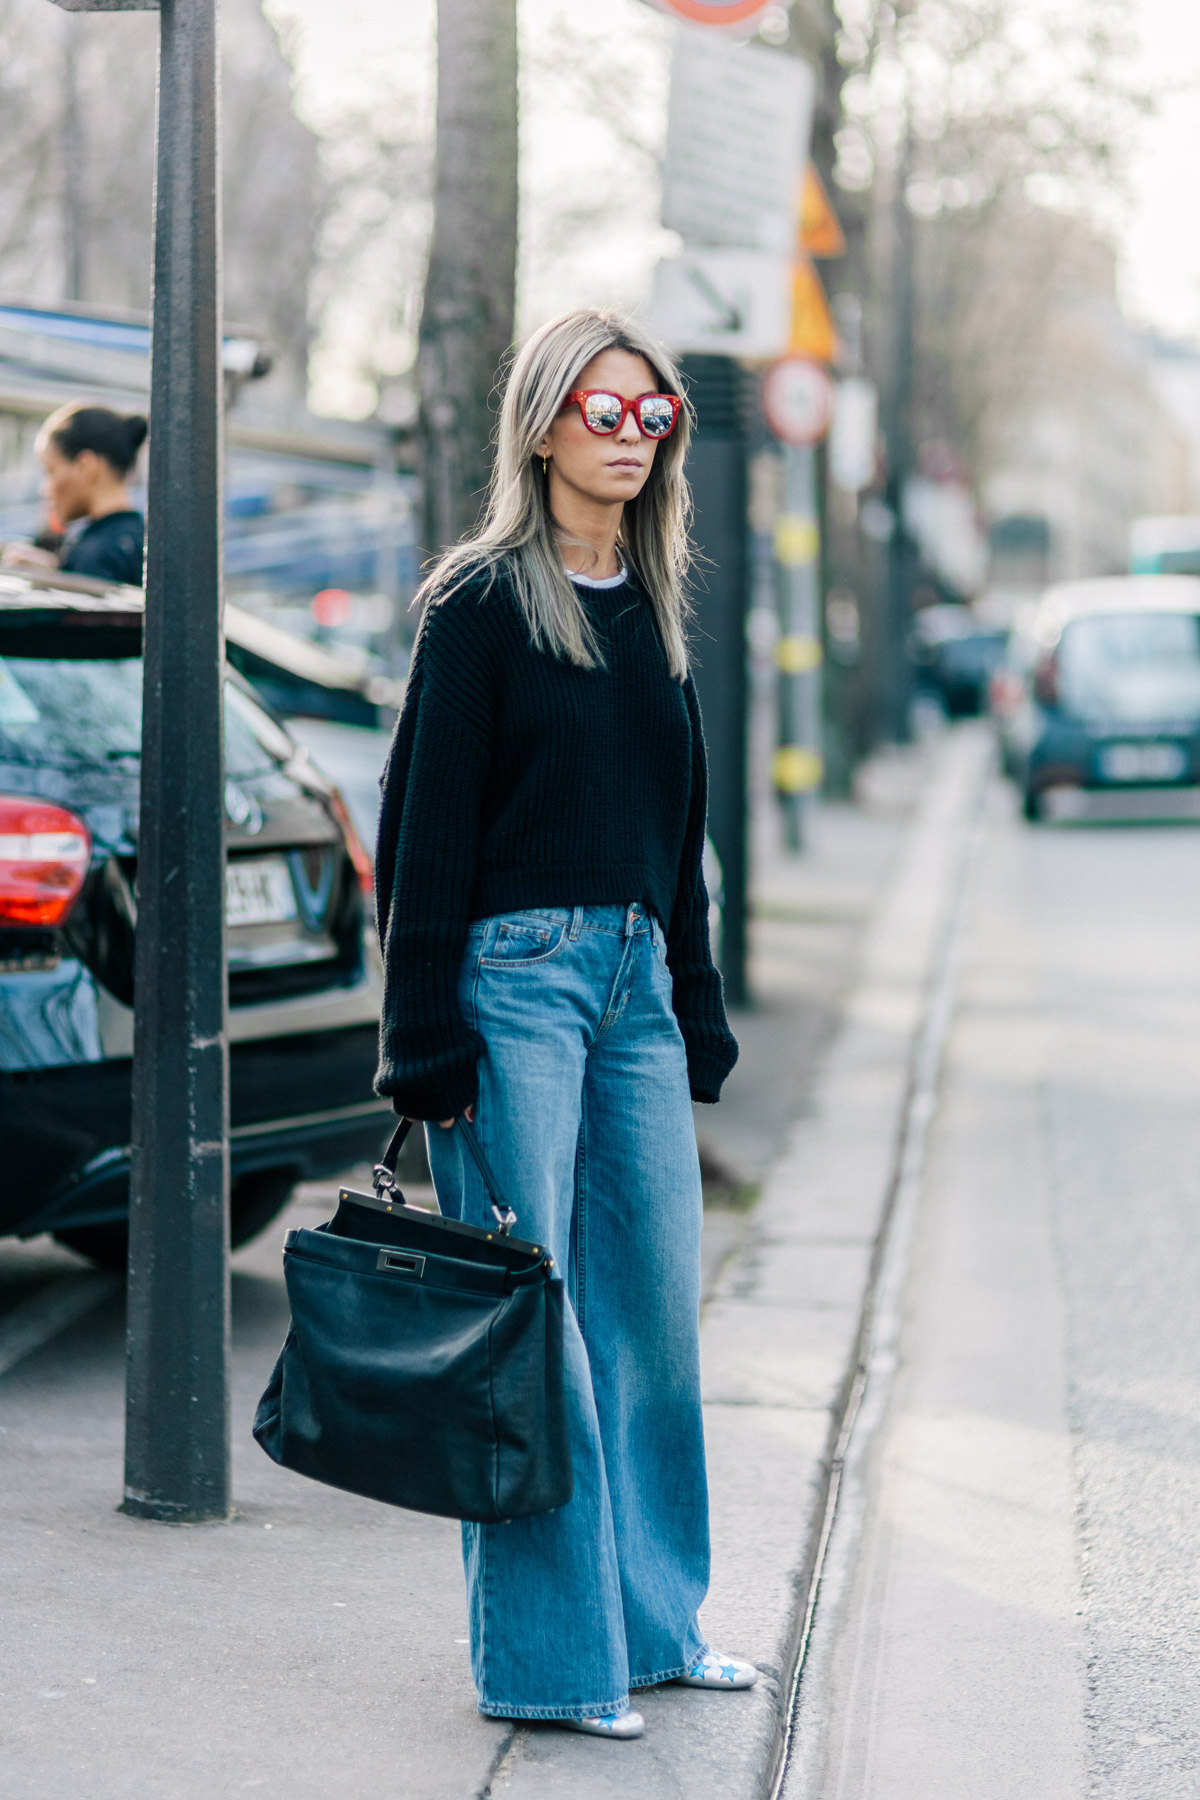 Carola Bernard wearing Zara jeans, Fendi bag, Spektre sunglasses and Saint Laurent boots after the Isabel Marant Fall/Winter 2015-2016 fashion show in Paris, France